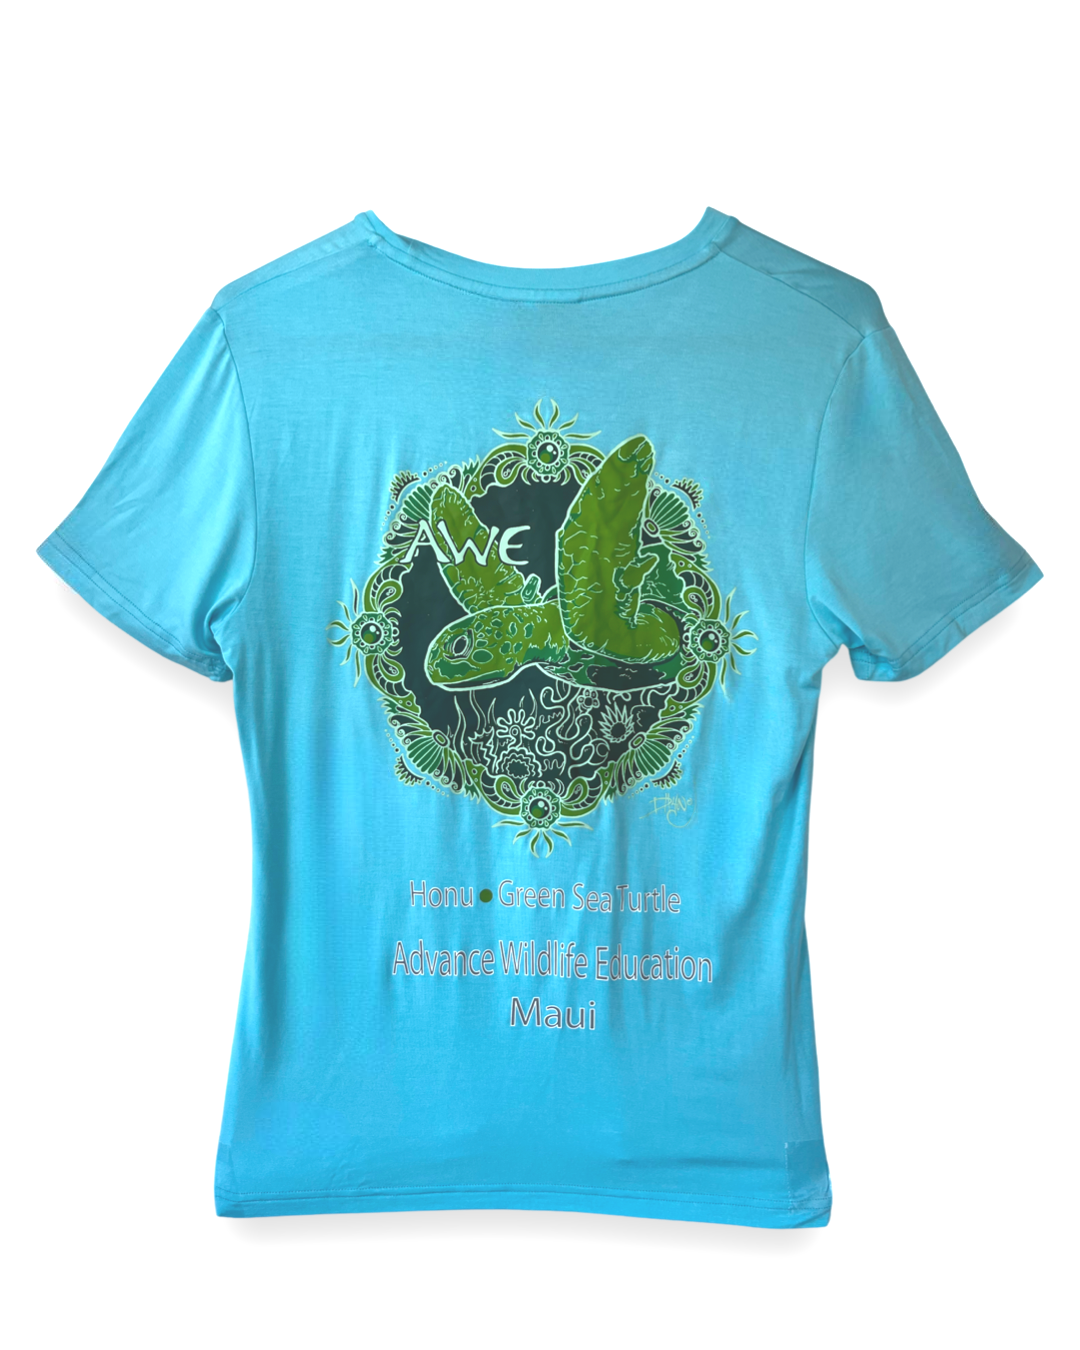 Camiseta unisex de bambú - Tortuga marina verde (azul claro) 